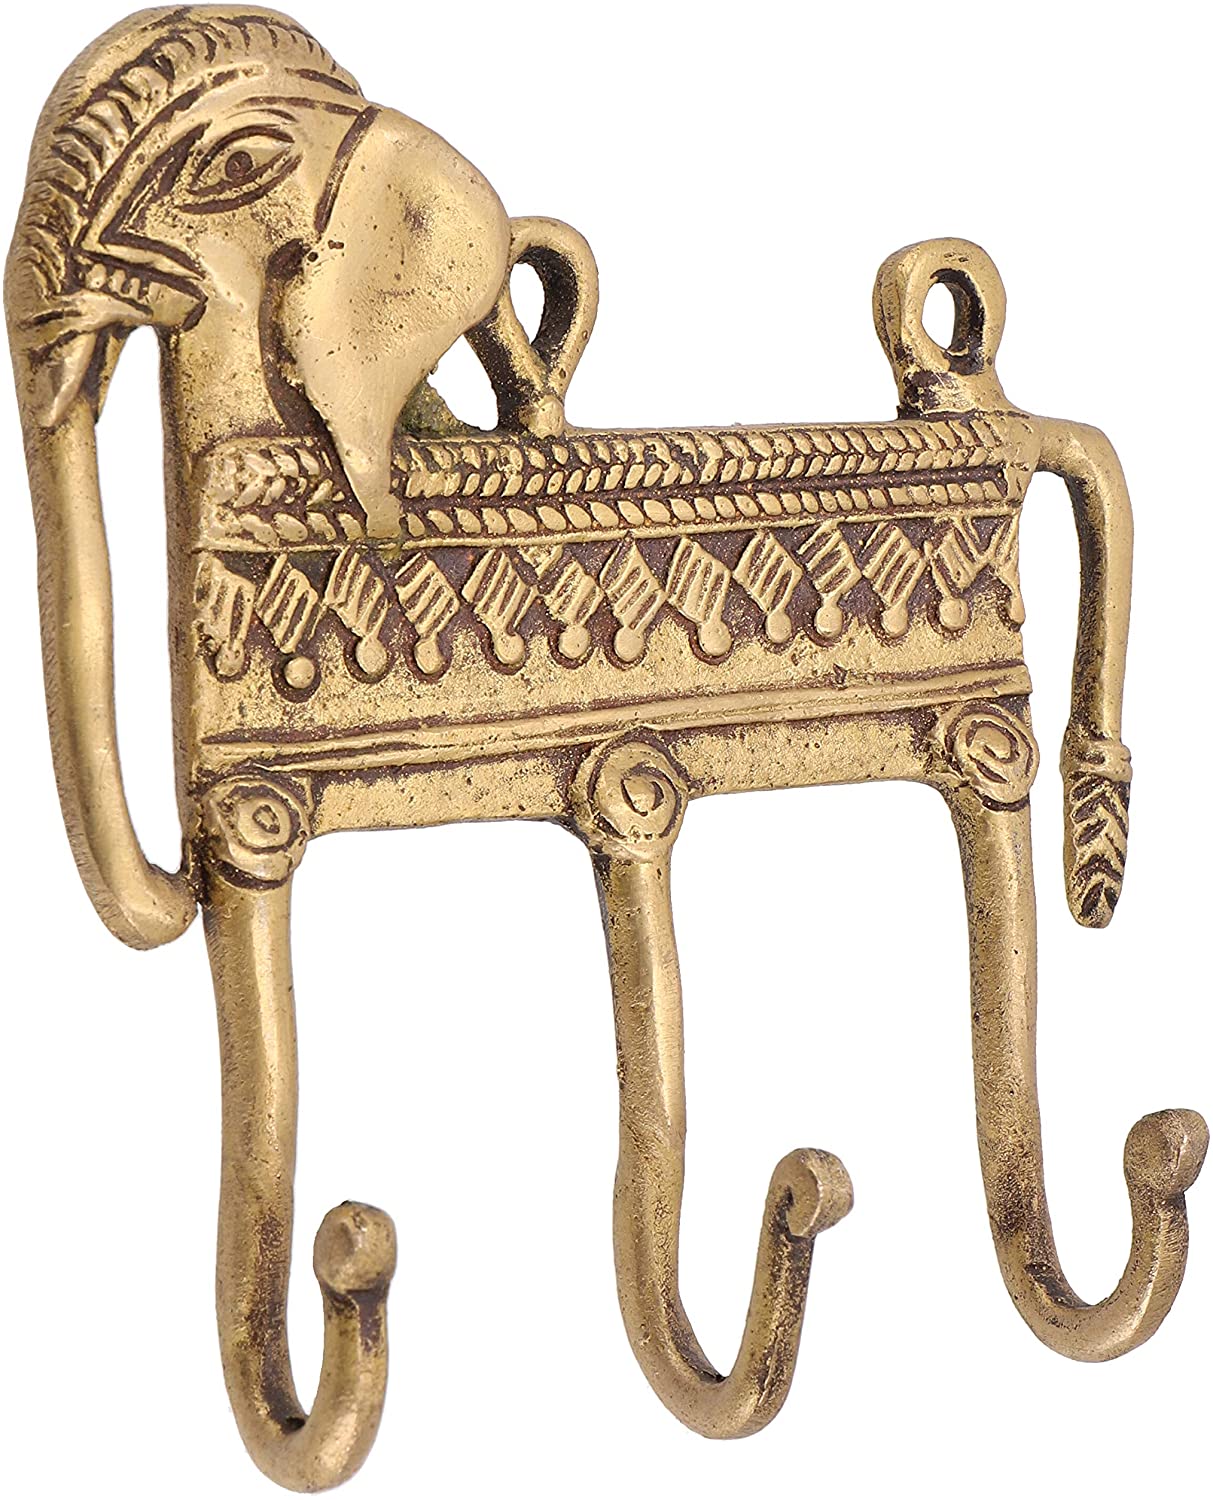 Guru-Shop Filigree Decorated Brass Wall Hook With Engraving Dog / Brass 11 